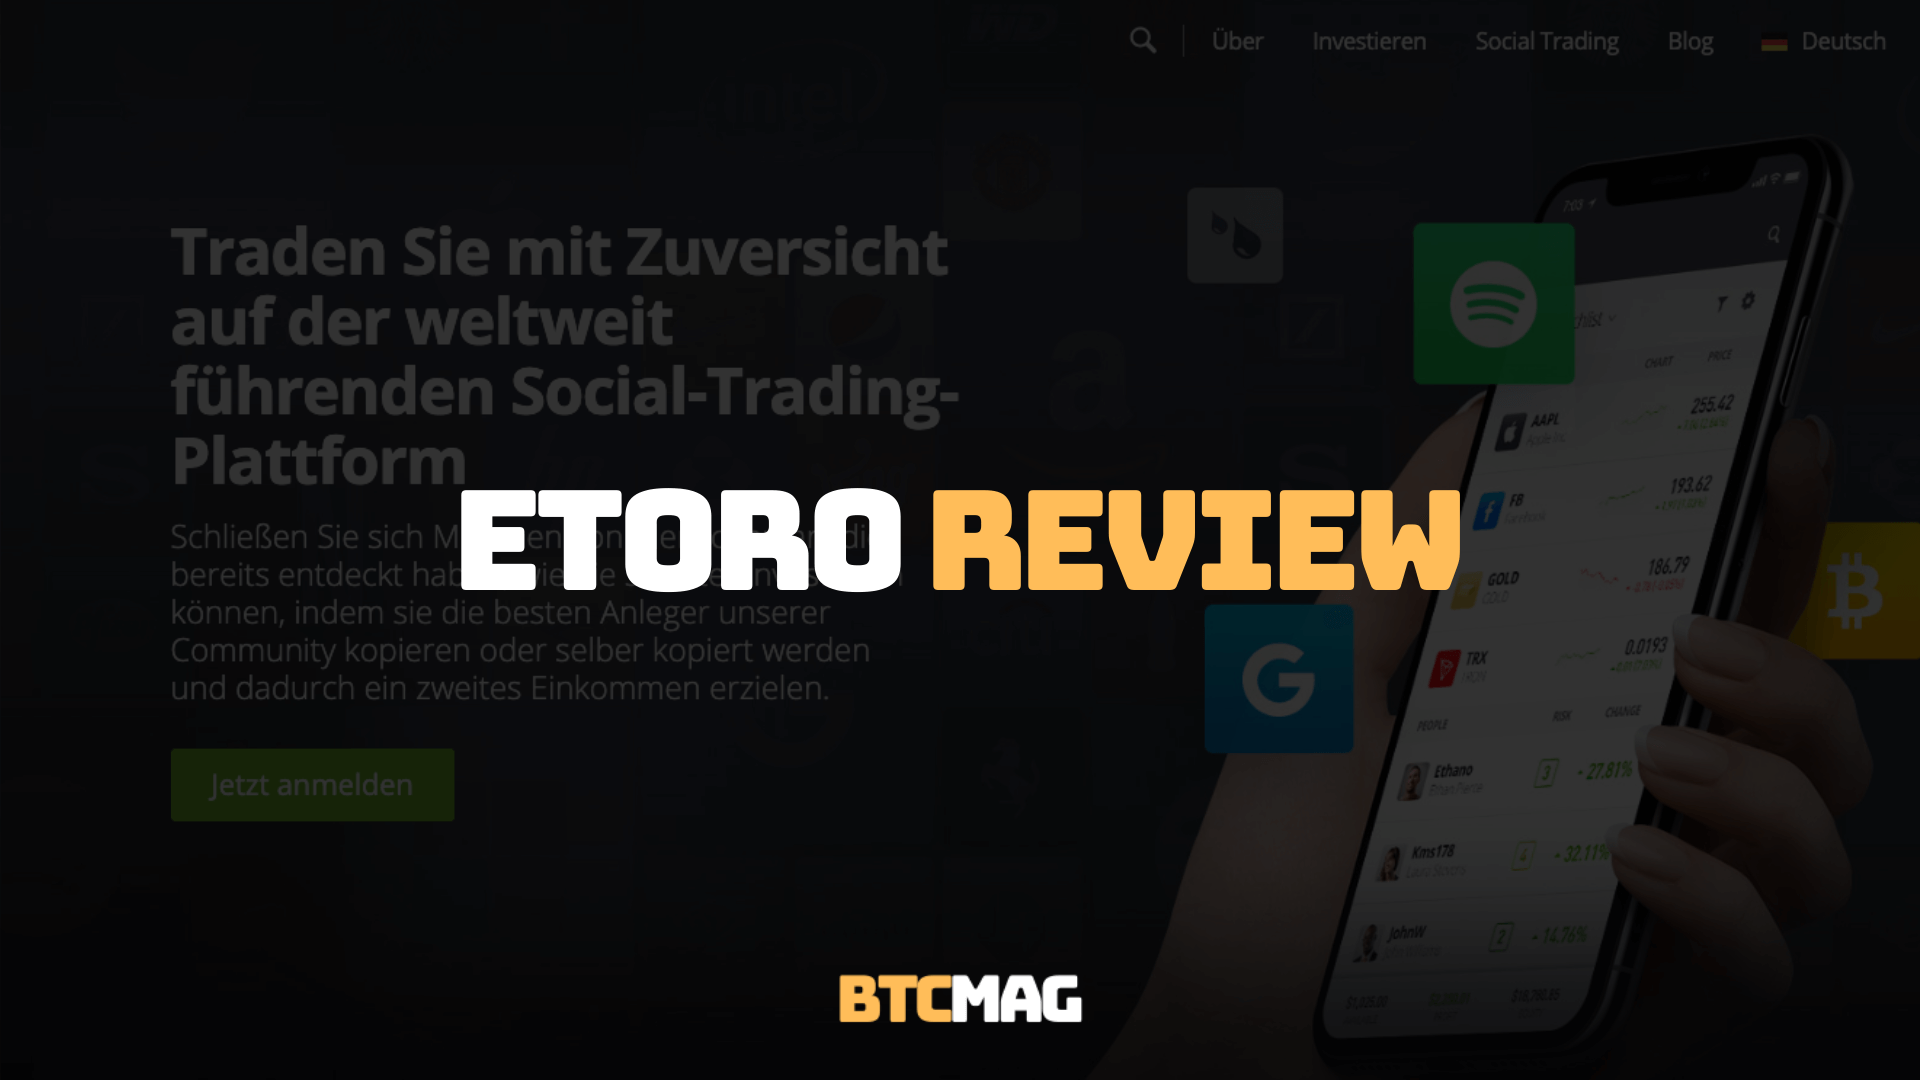 eToro Review ⚠️ Trading & Investment Erfahrungen 2020 | BTCMAG